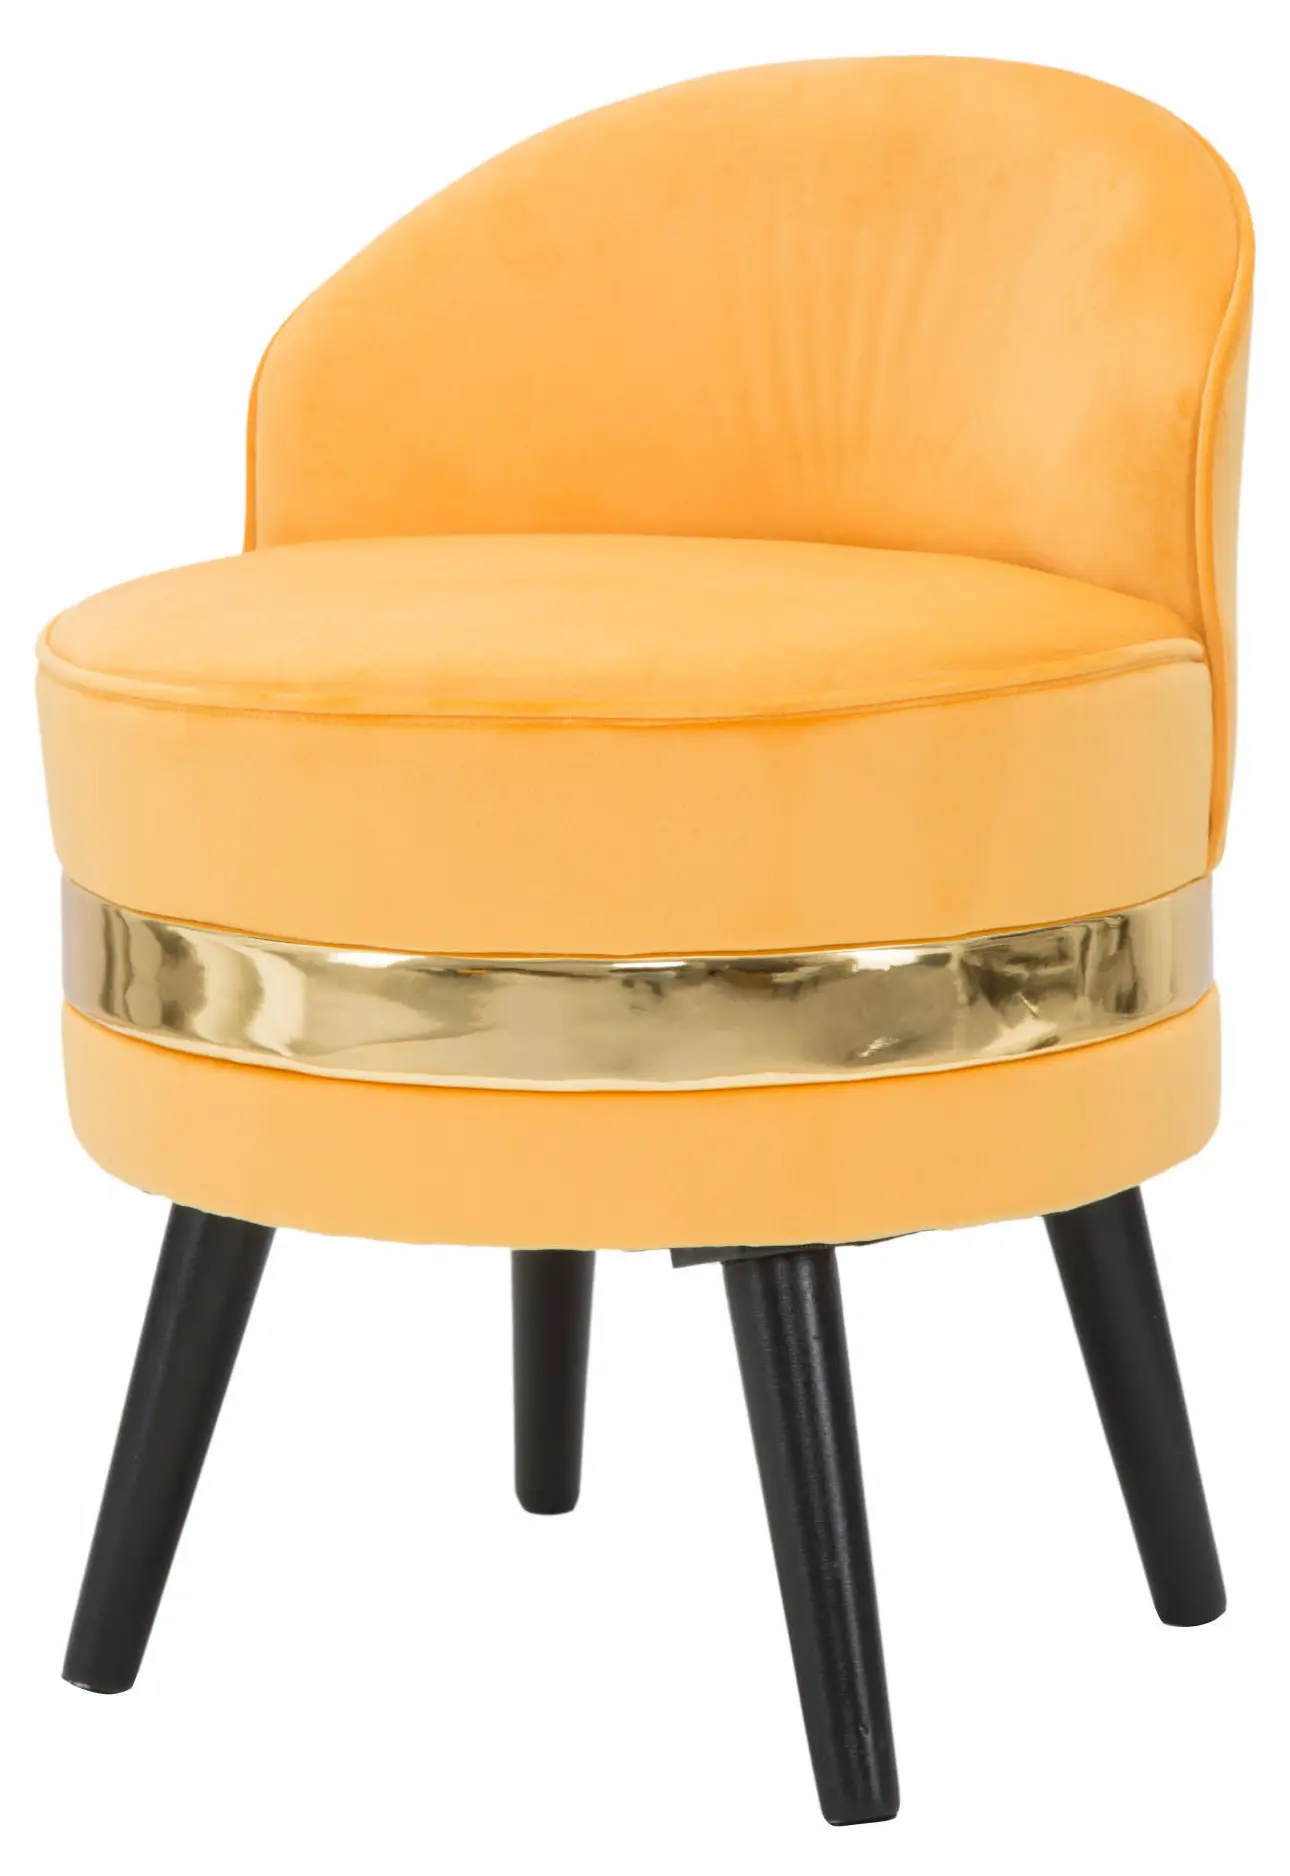 Mini-Stuhl Kiefernholz aus